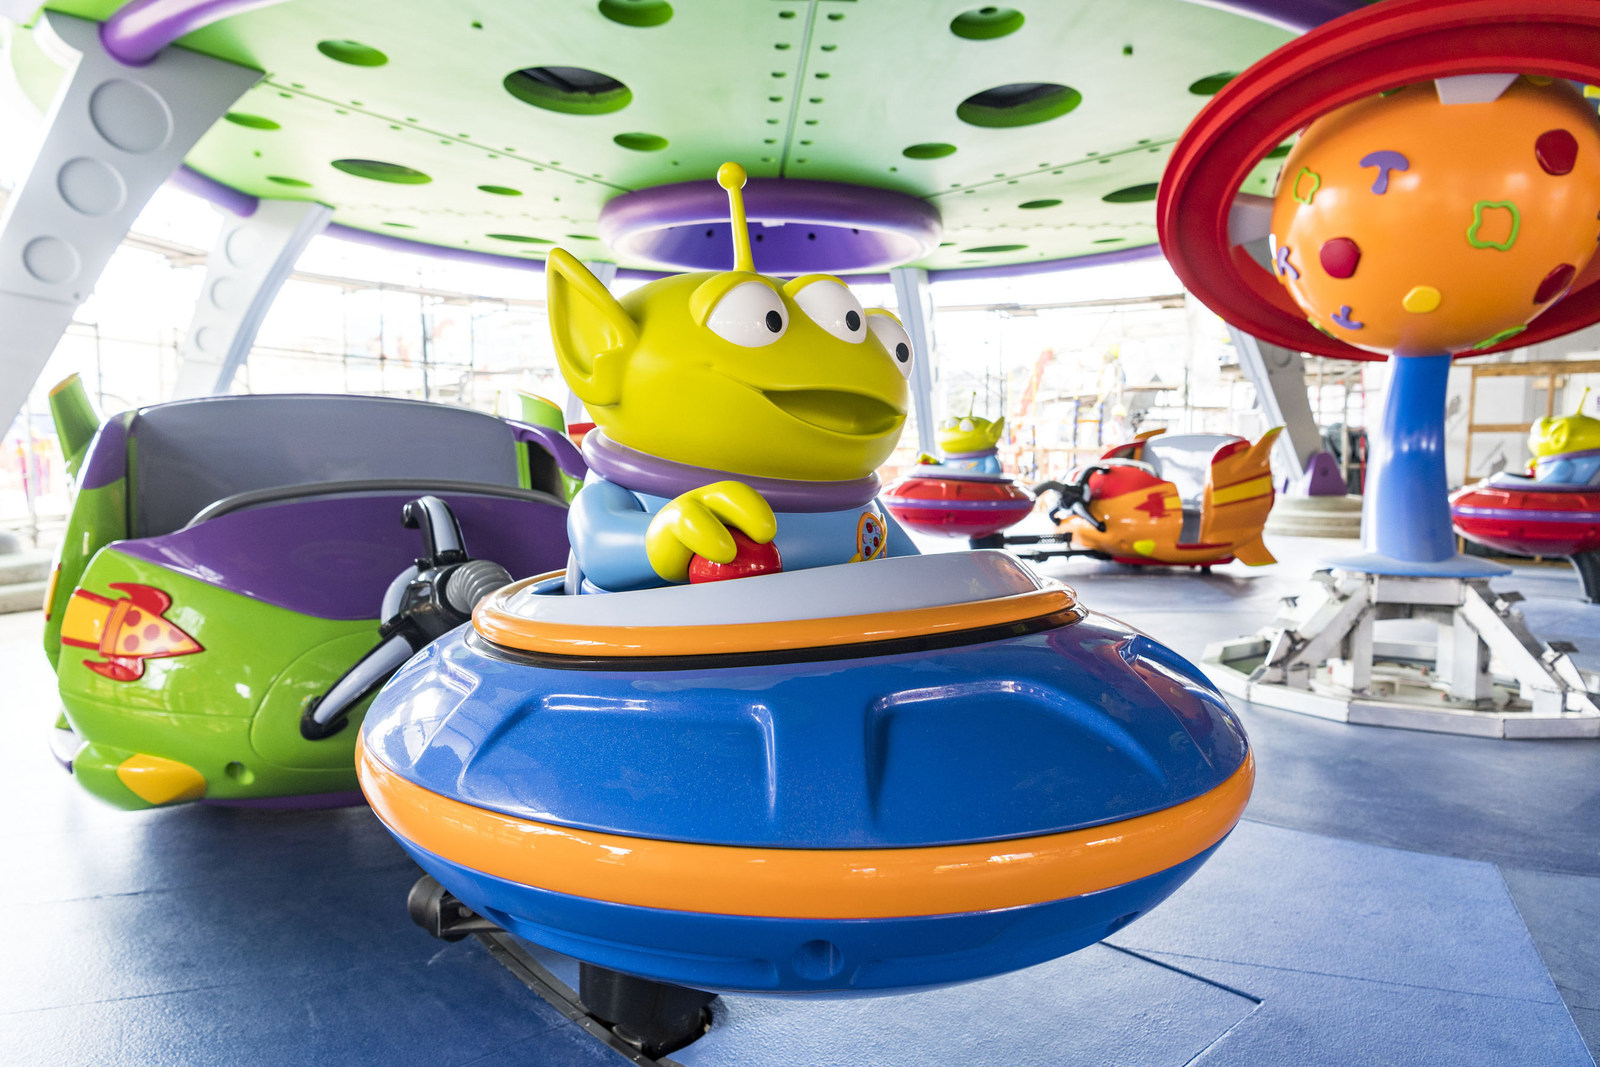 Little green aliens from the hit DisneyPixar "Toy Story" films pilot toy rocket ships in the Alien Swirling Saucers attraction that will be part of the new Toy Story Land